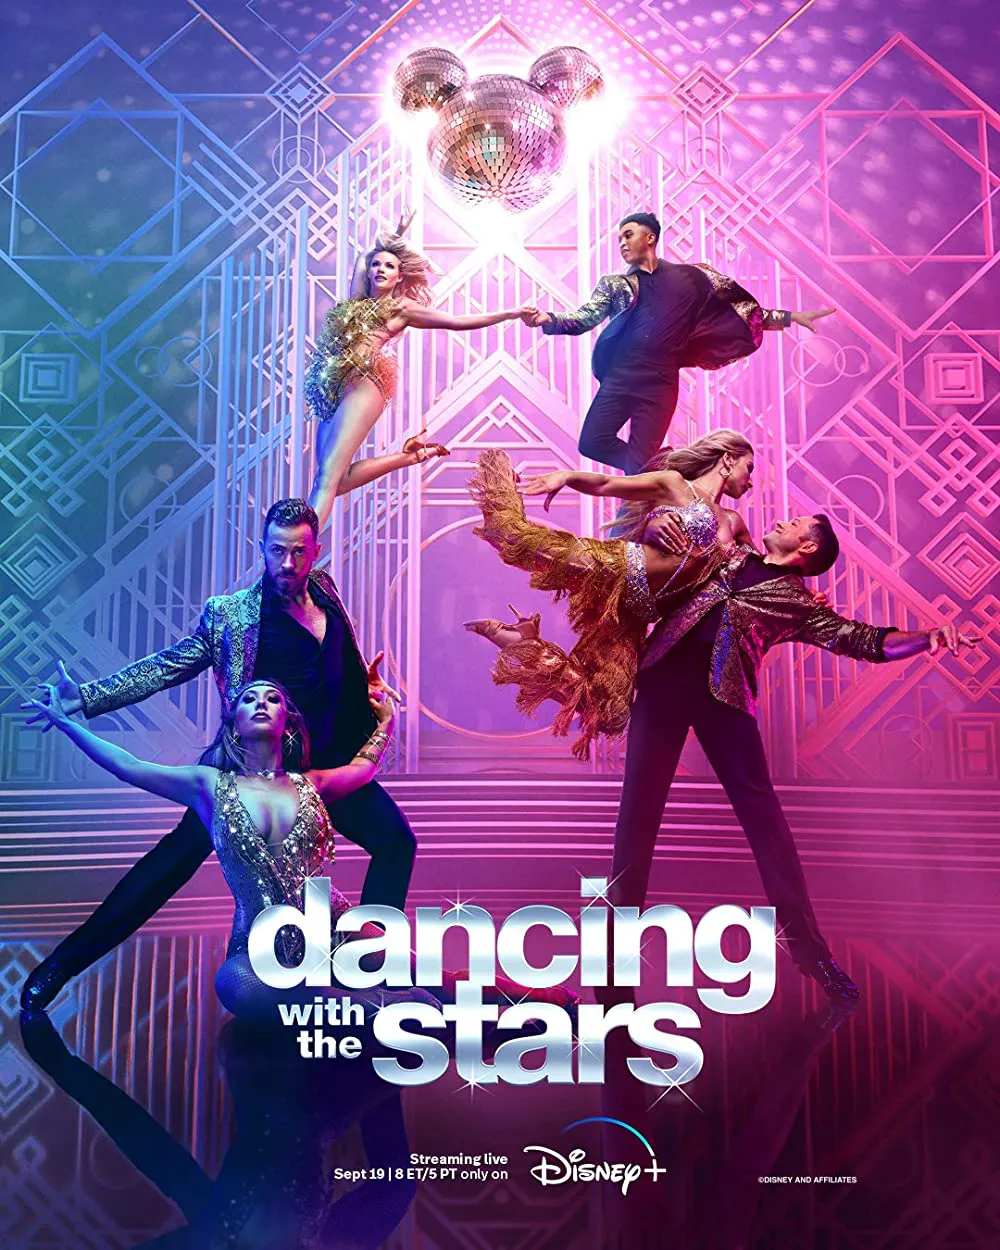 Is “Dancing With the Stars Season 31” on Disney+